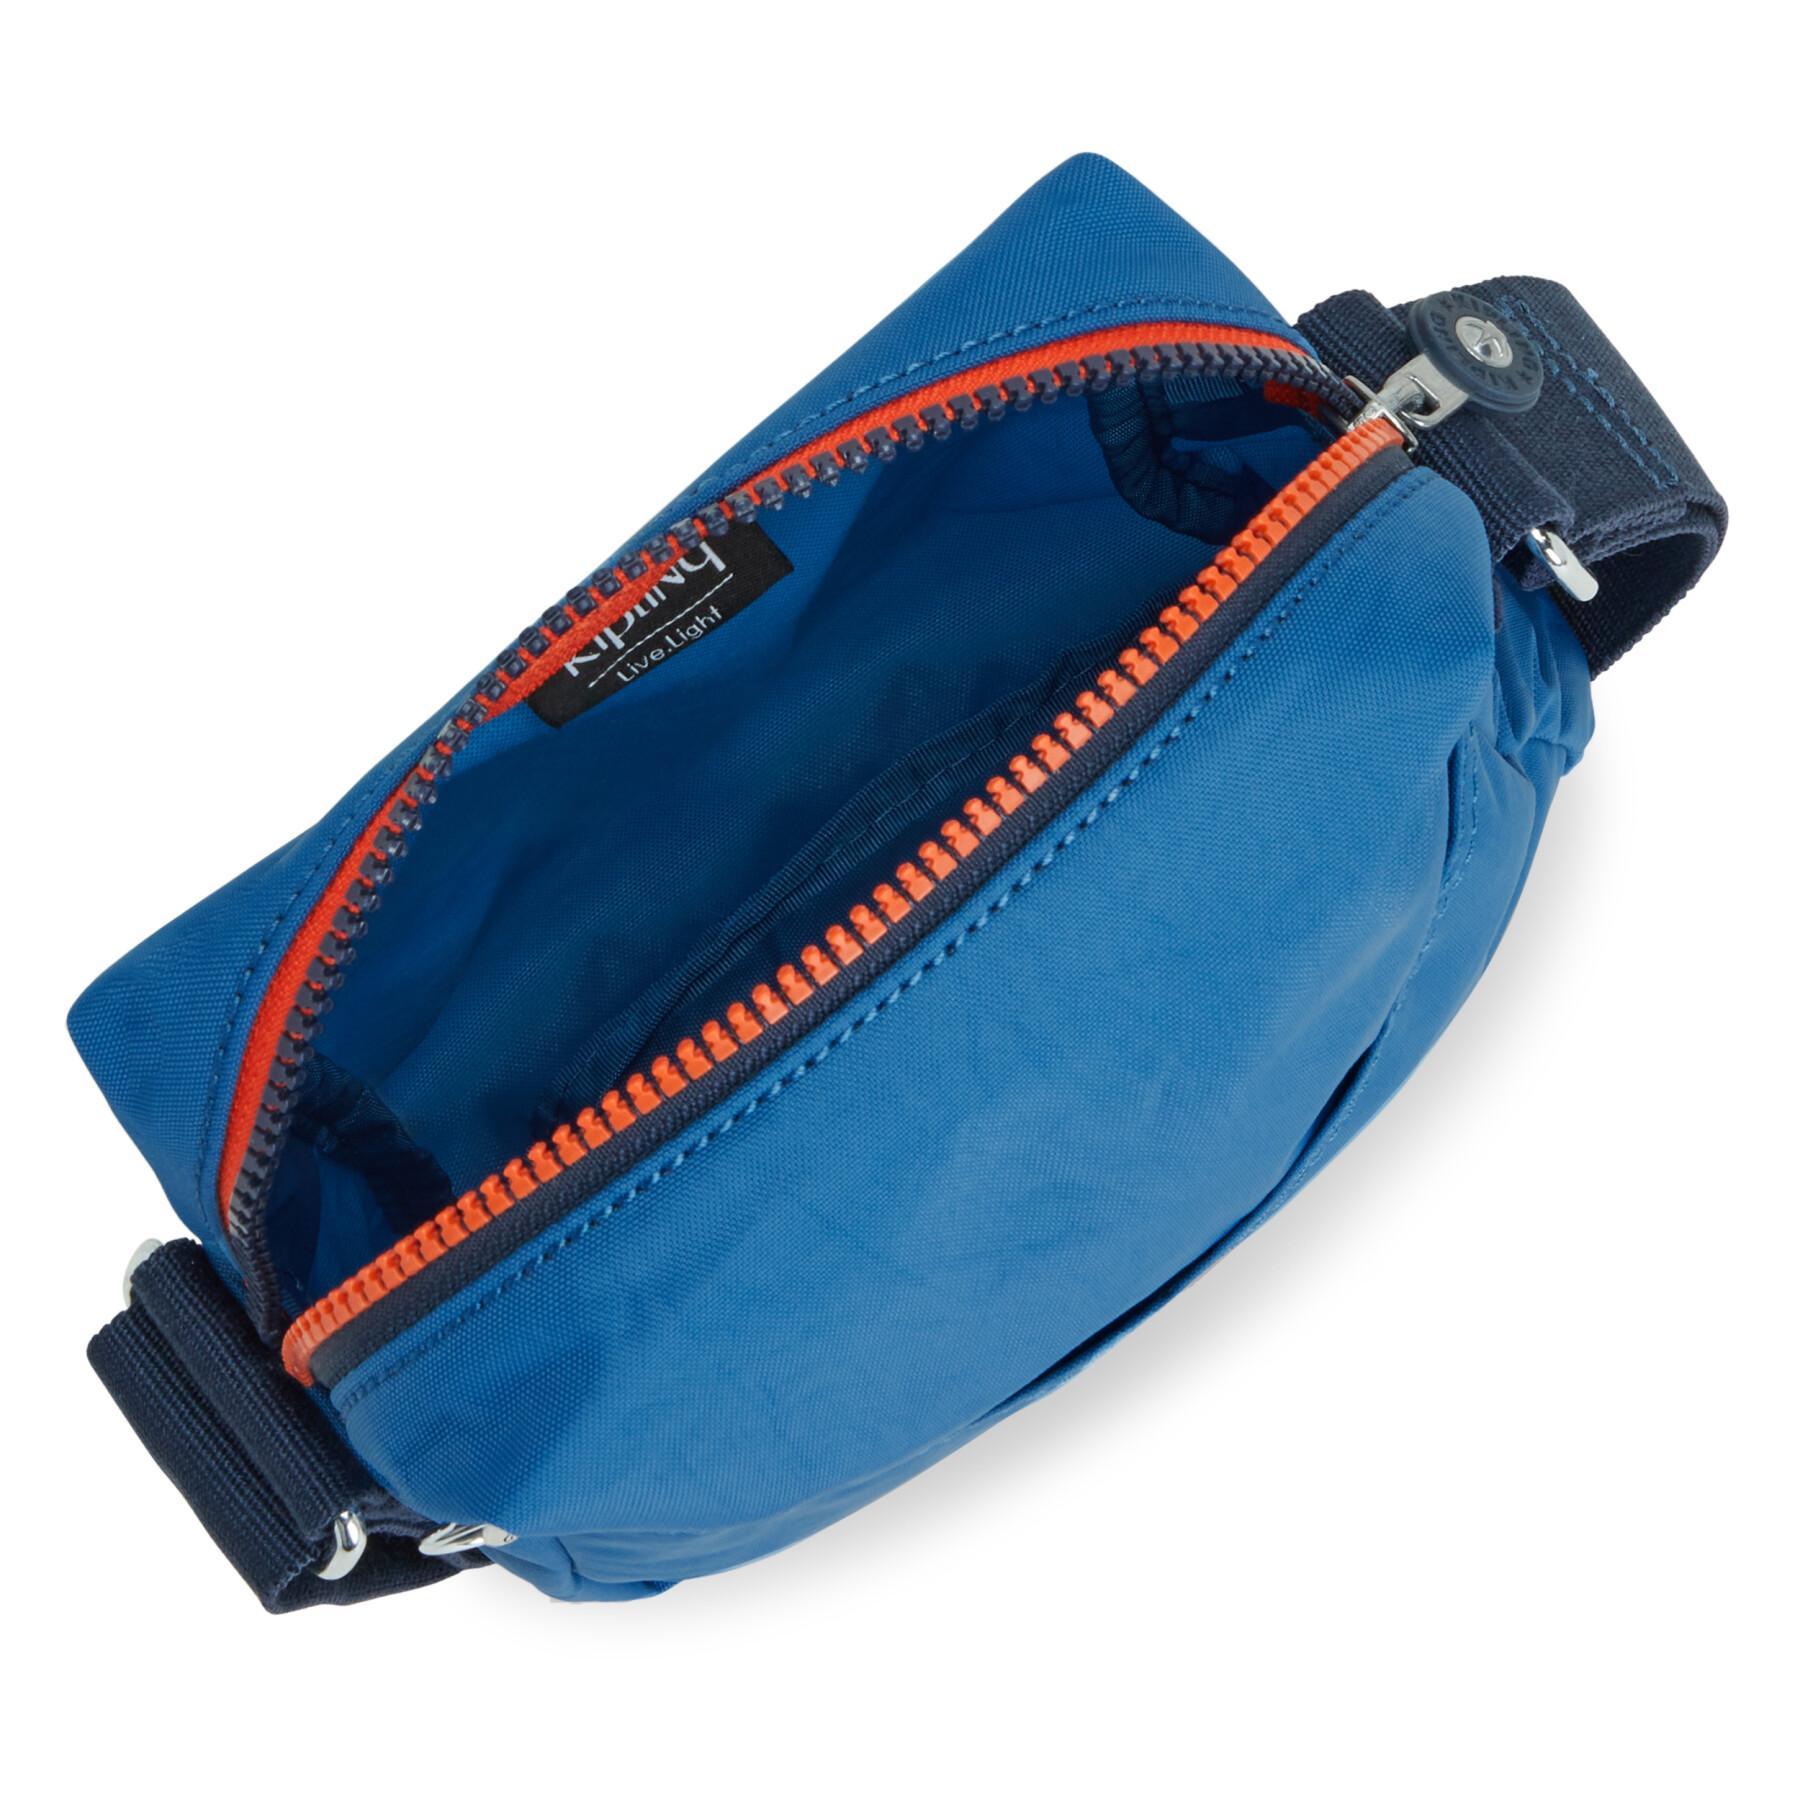 Women's shoulder bag Kipling Chaz Cnt Racing Blue Combo